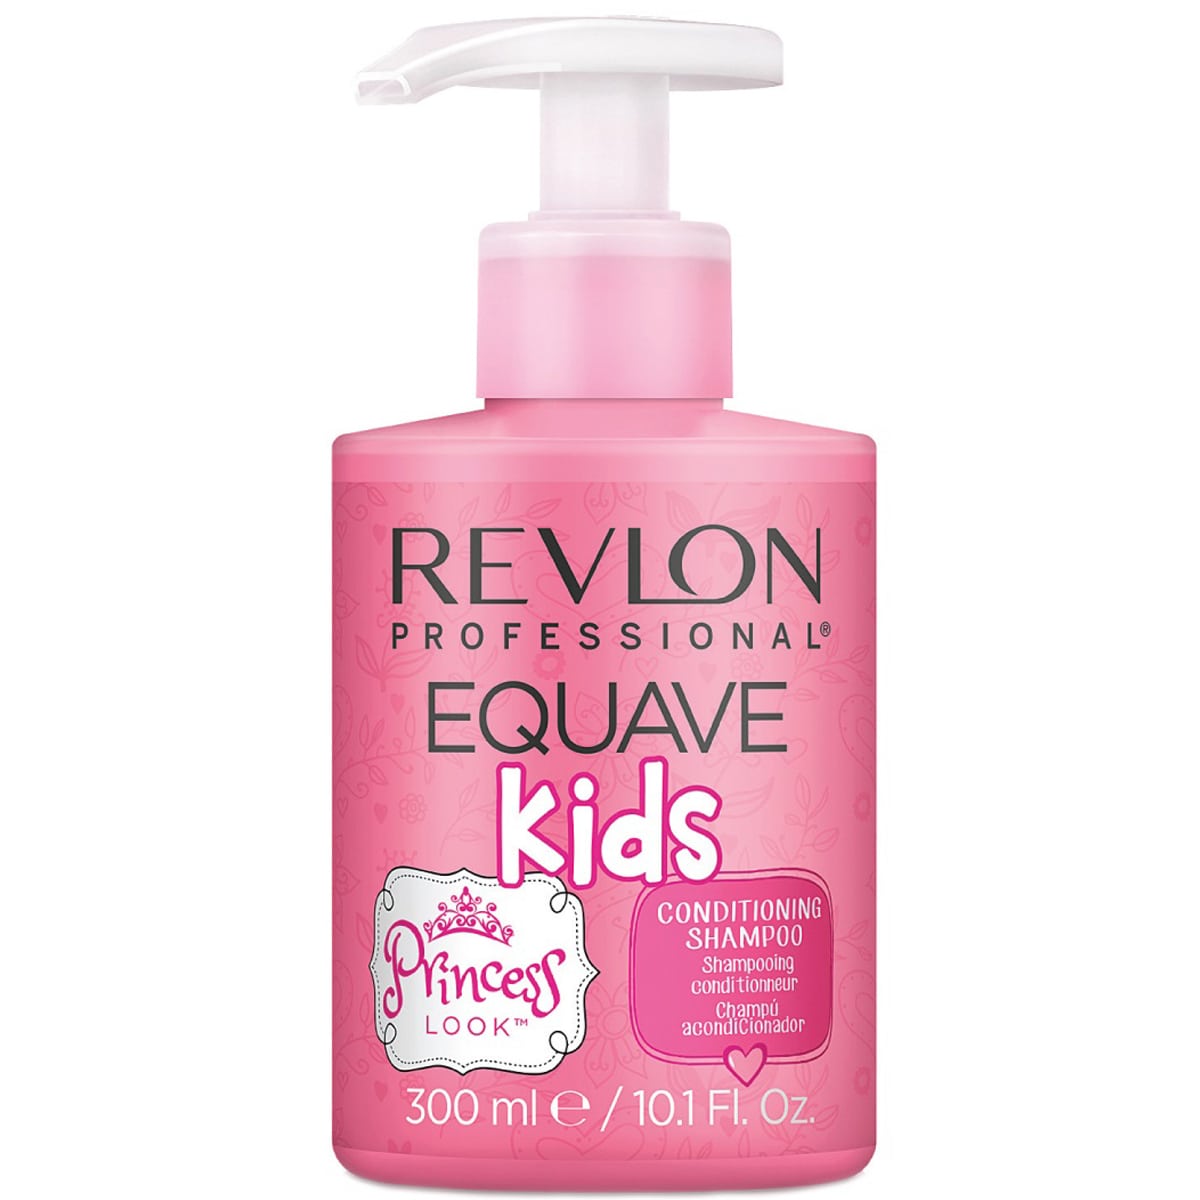 Revlon Professional Детский шампунь для волос, 300 мл (Revlon Professional, Equave) цена и фото